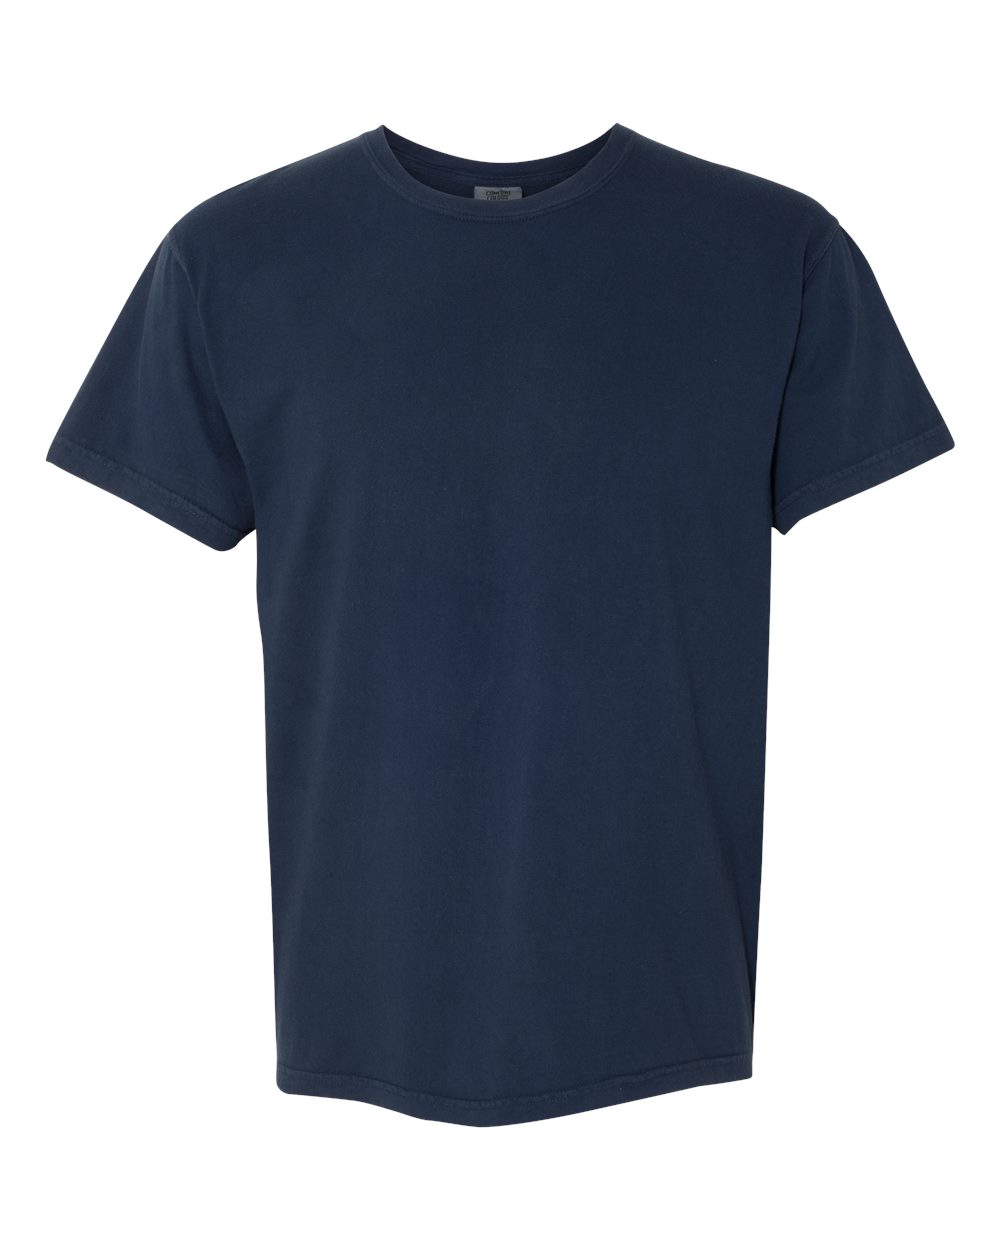 Comfort Colors Heavyweight T-Shirt Size Medium